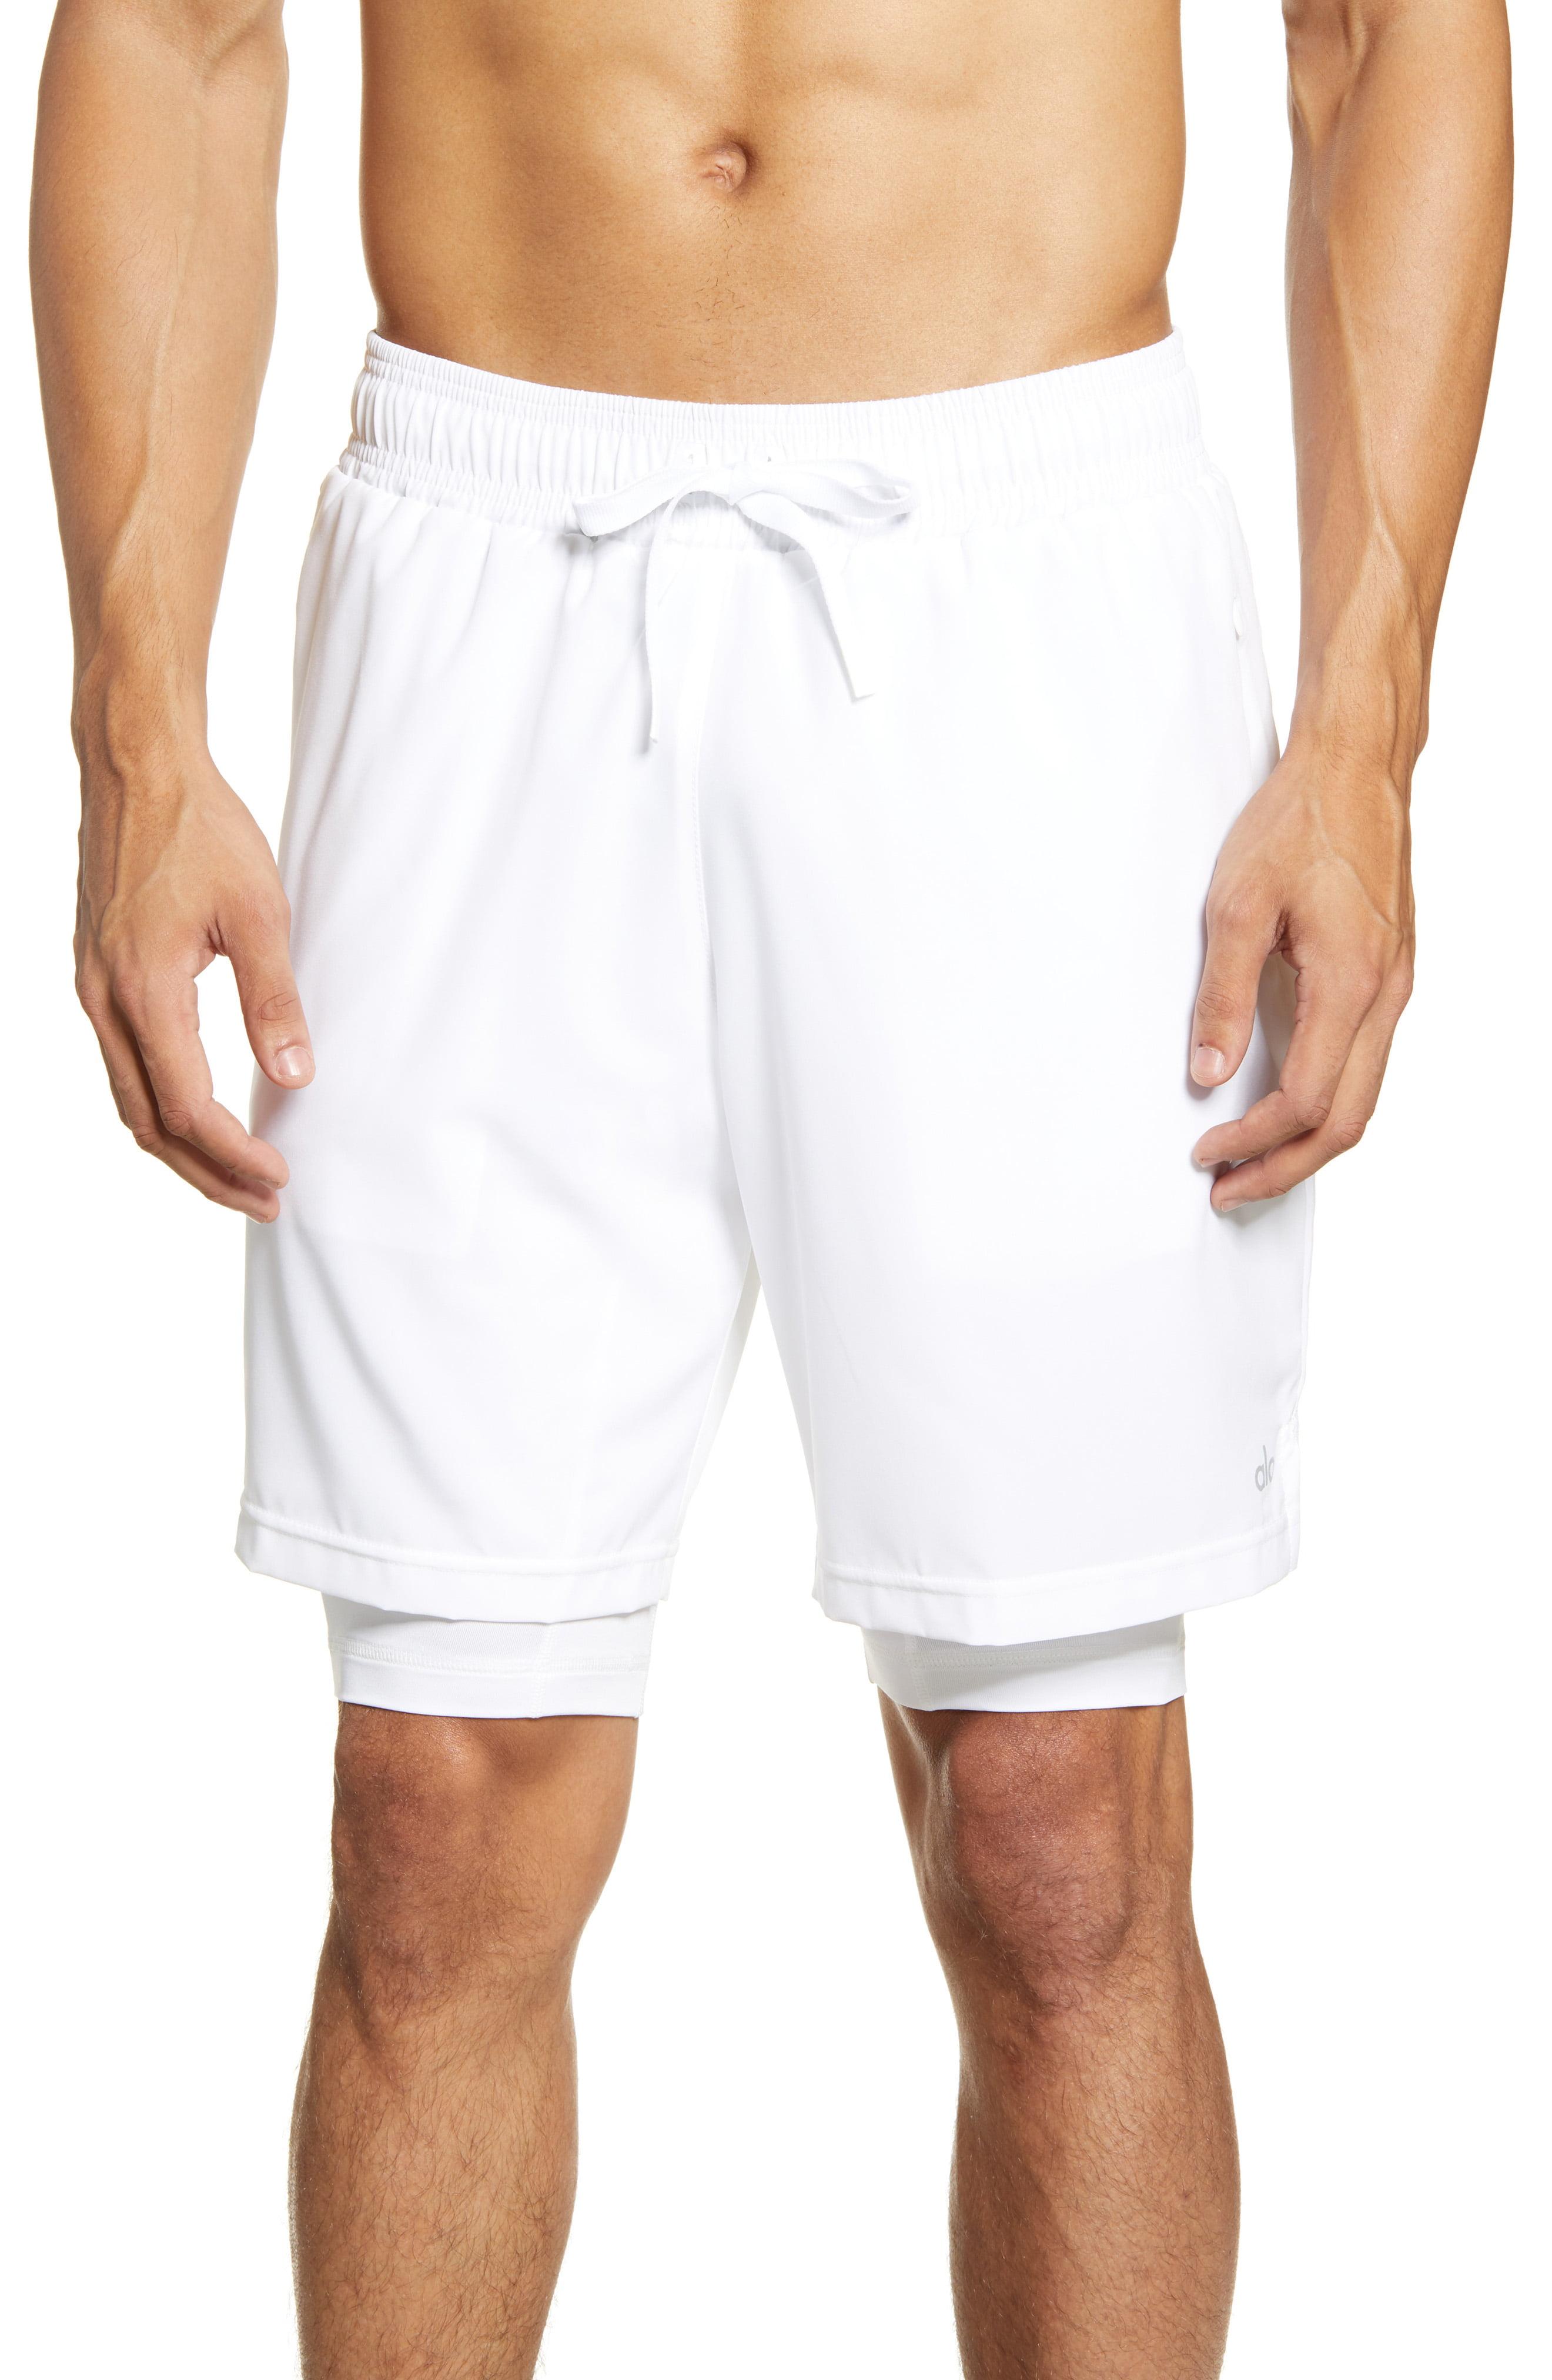 Alo Yoga Unity 2-in-1 Shorts in White/White (White) for Men - Lyst